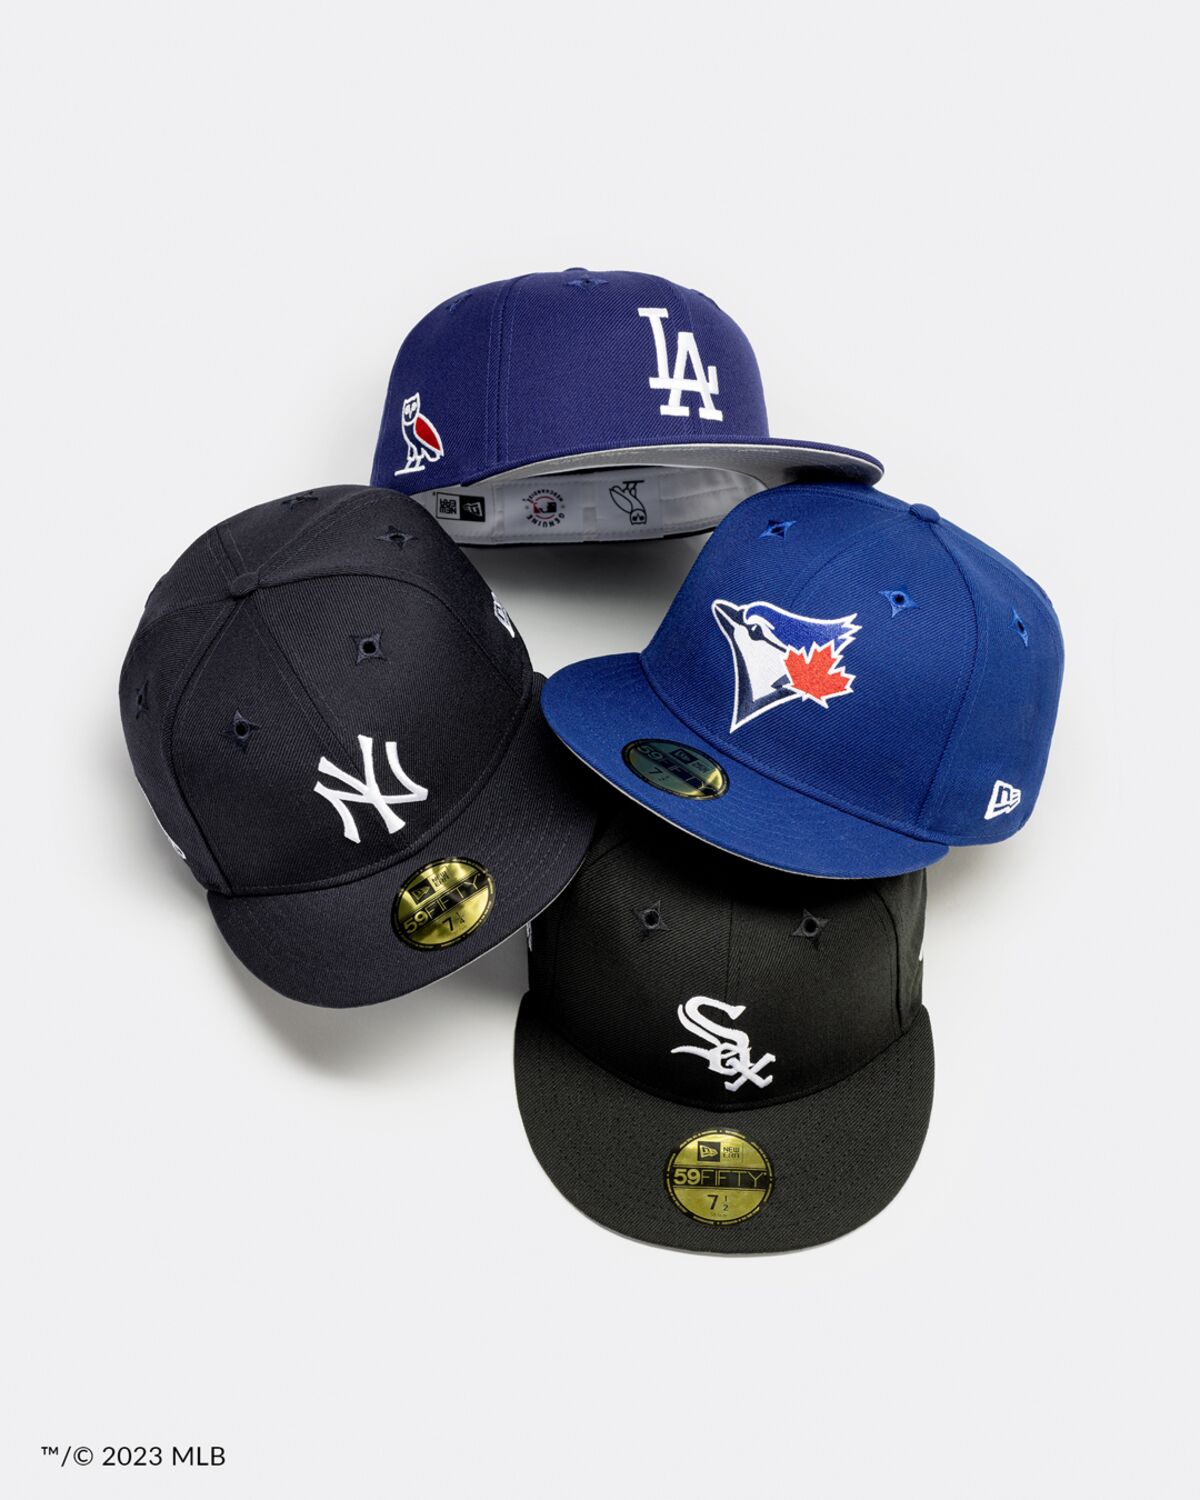 New Era New York Yankees Men's Hat MLB Baseball BLC Original White